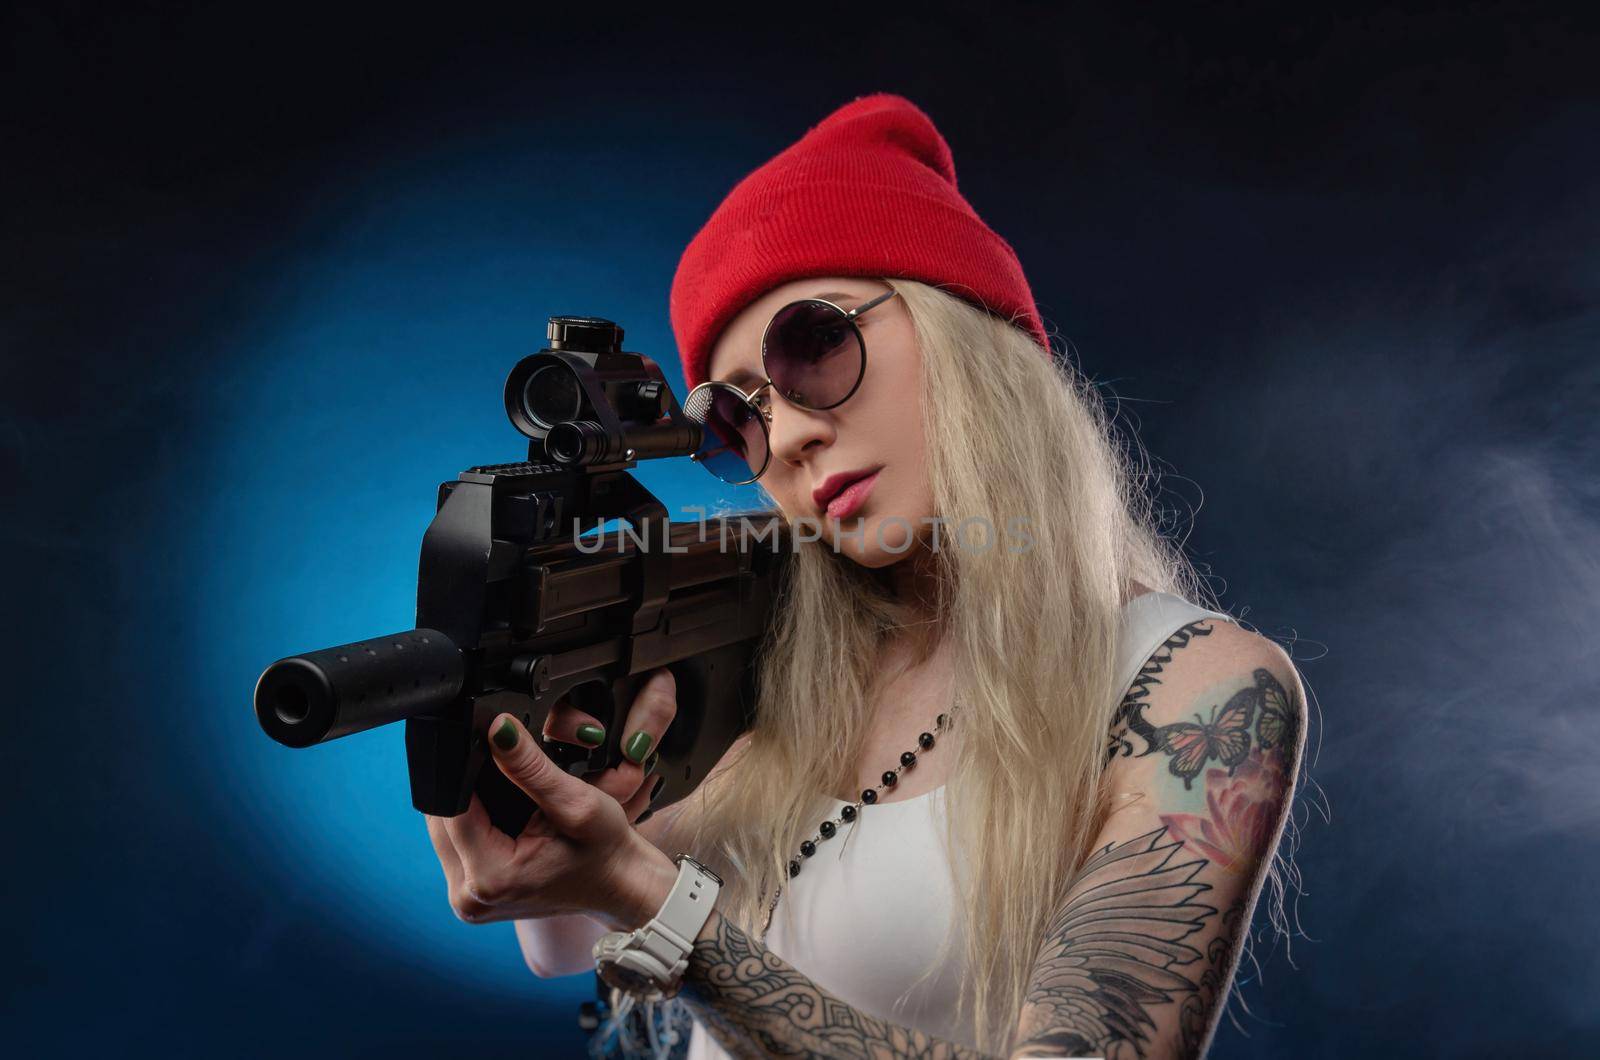 bright blonde in a red hat with a submachine gun on a dark background